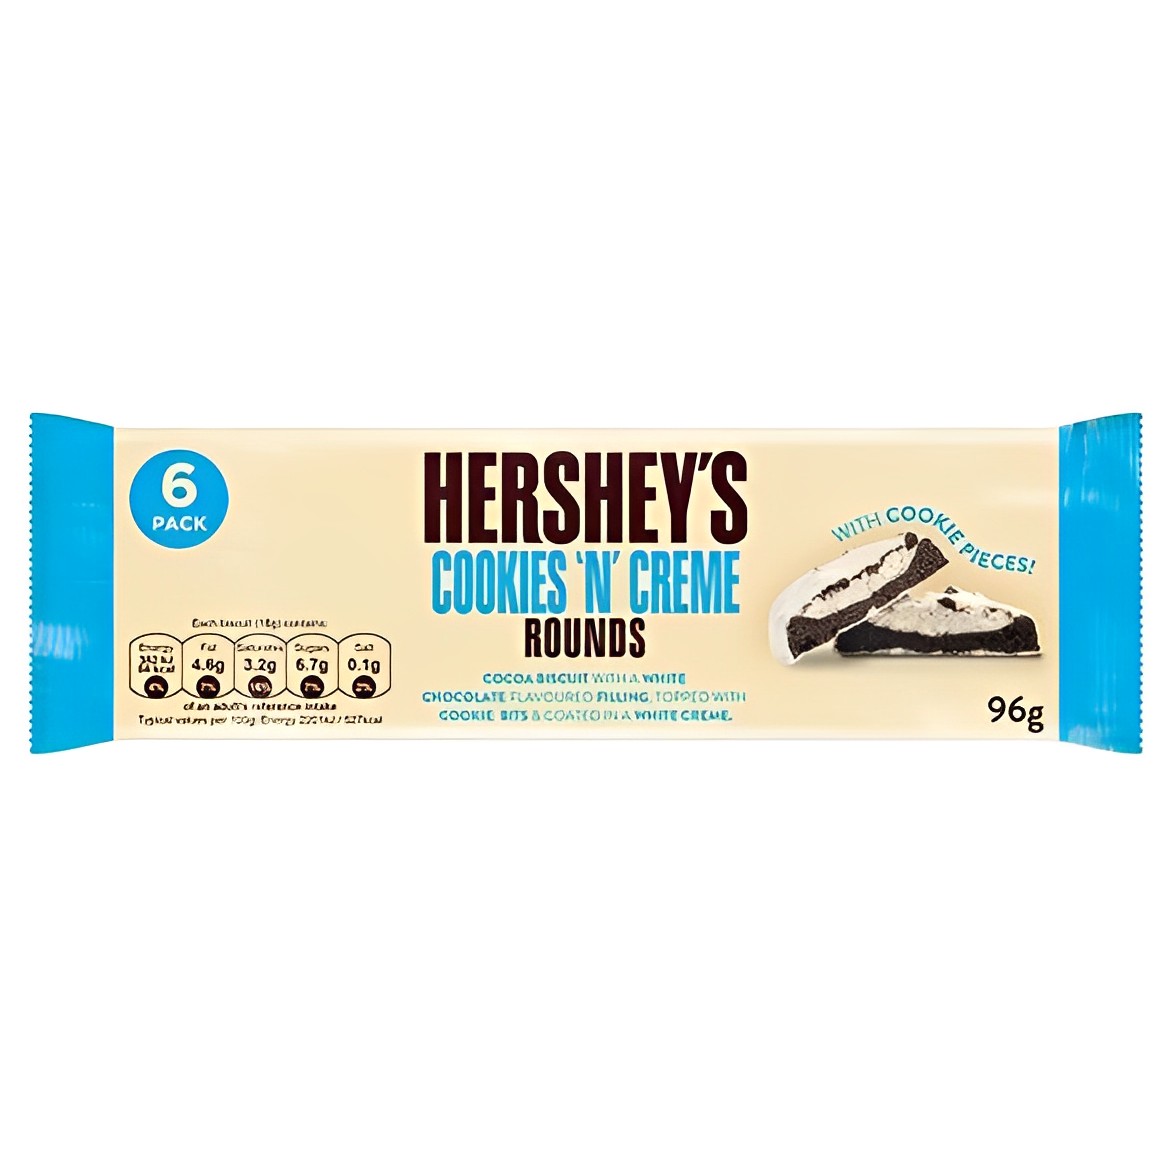 Šokolādes konfektes HERSHEY'S (ROUNDS), 96g foto